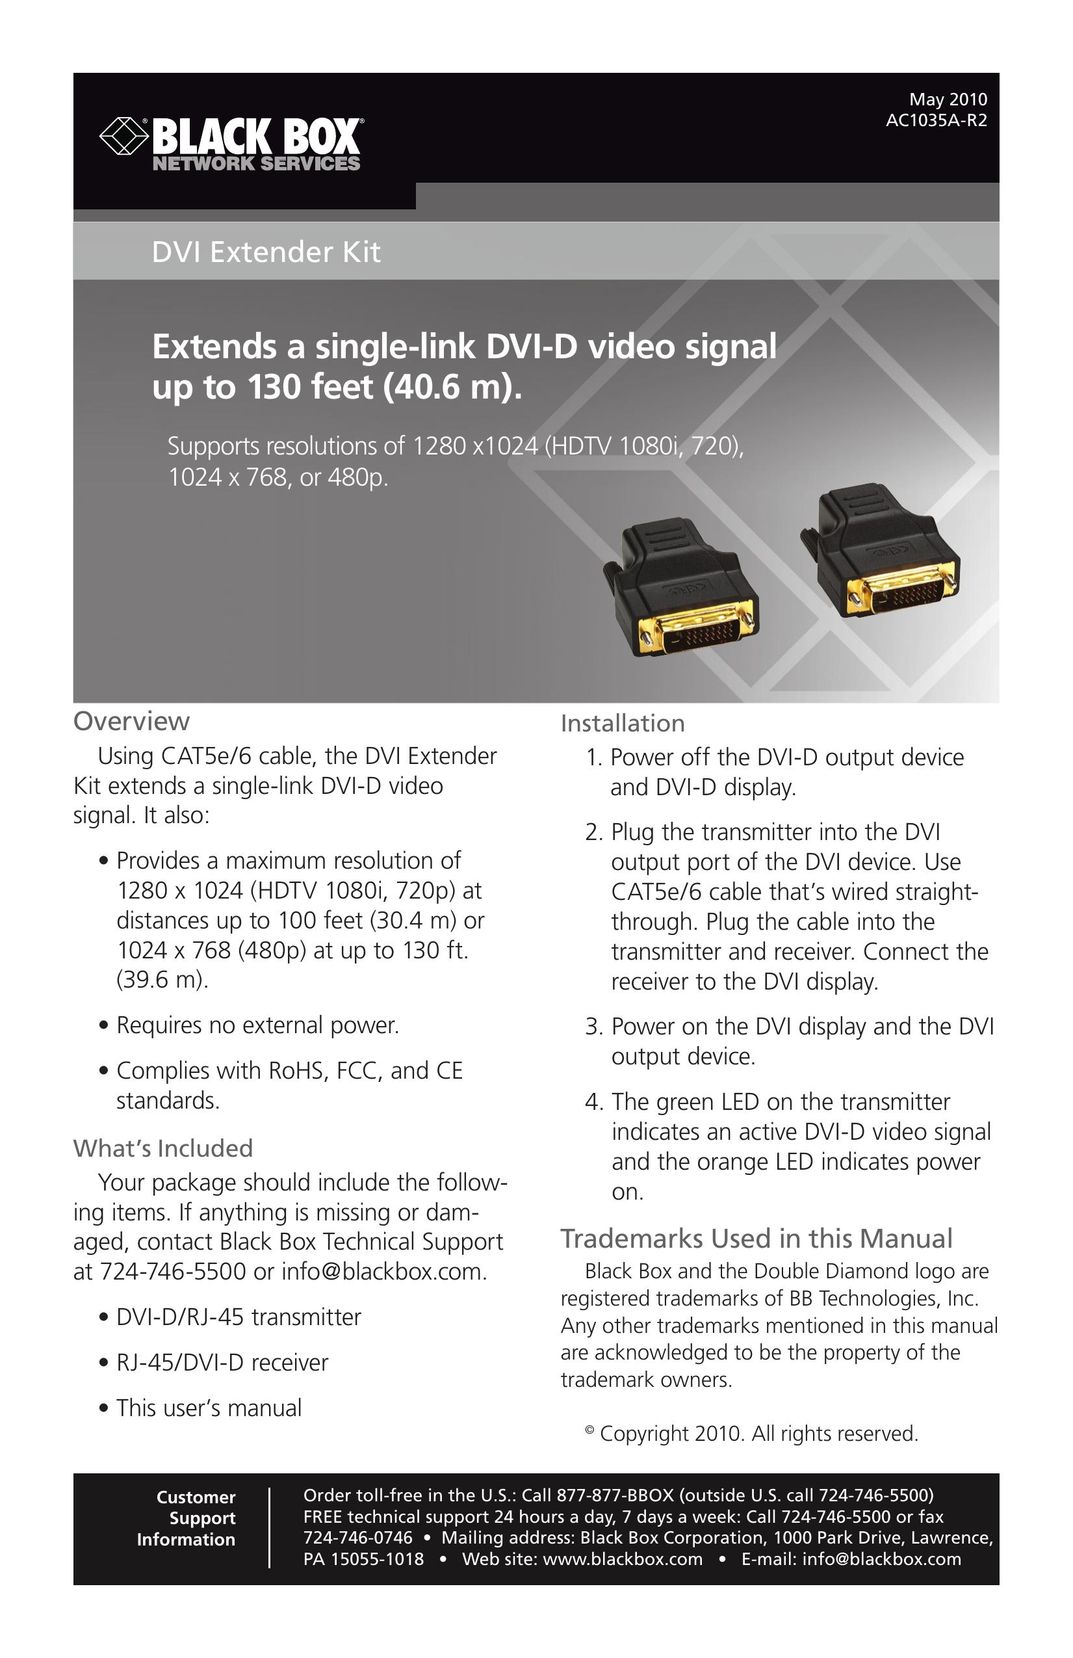 Black Box DVI Extender Kit TV Video Accessories User Manual